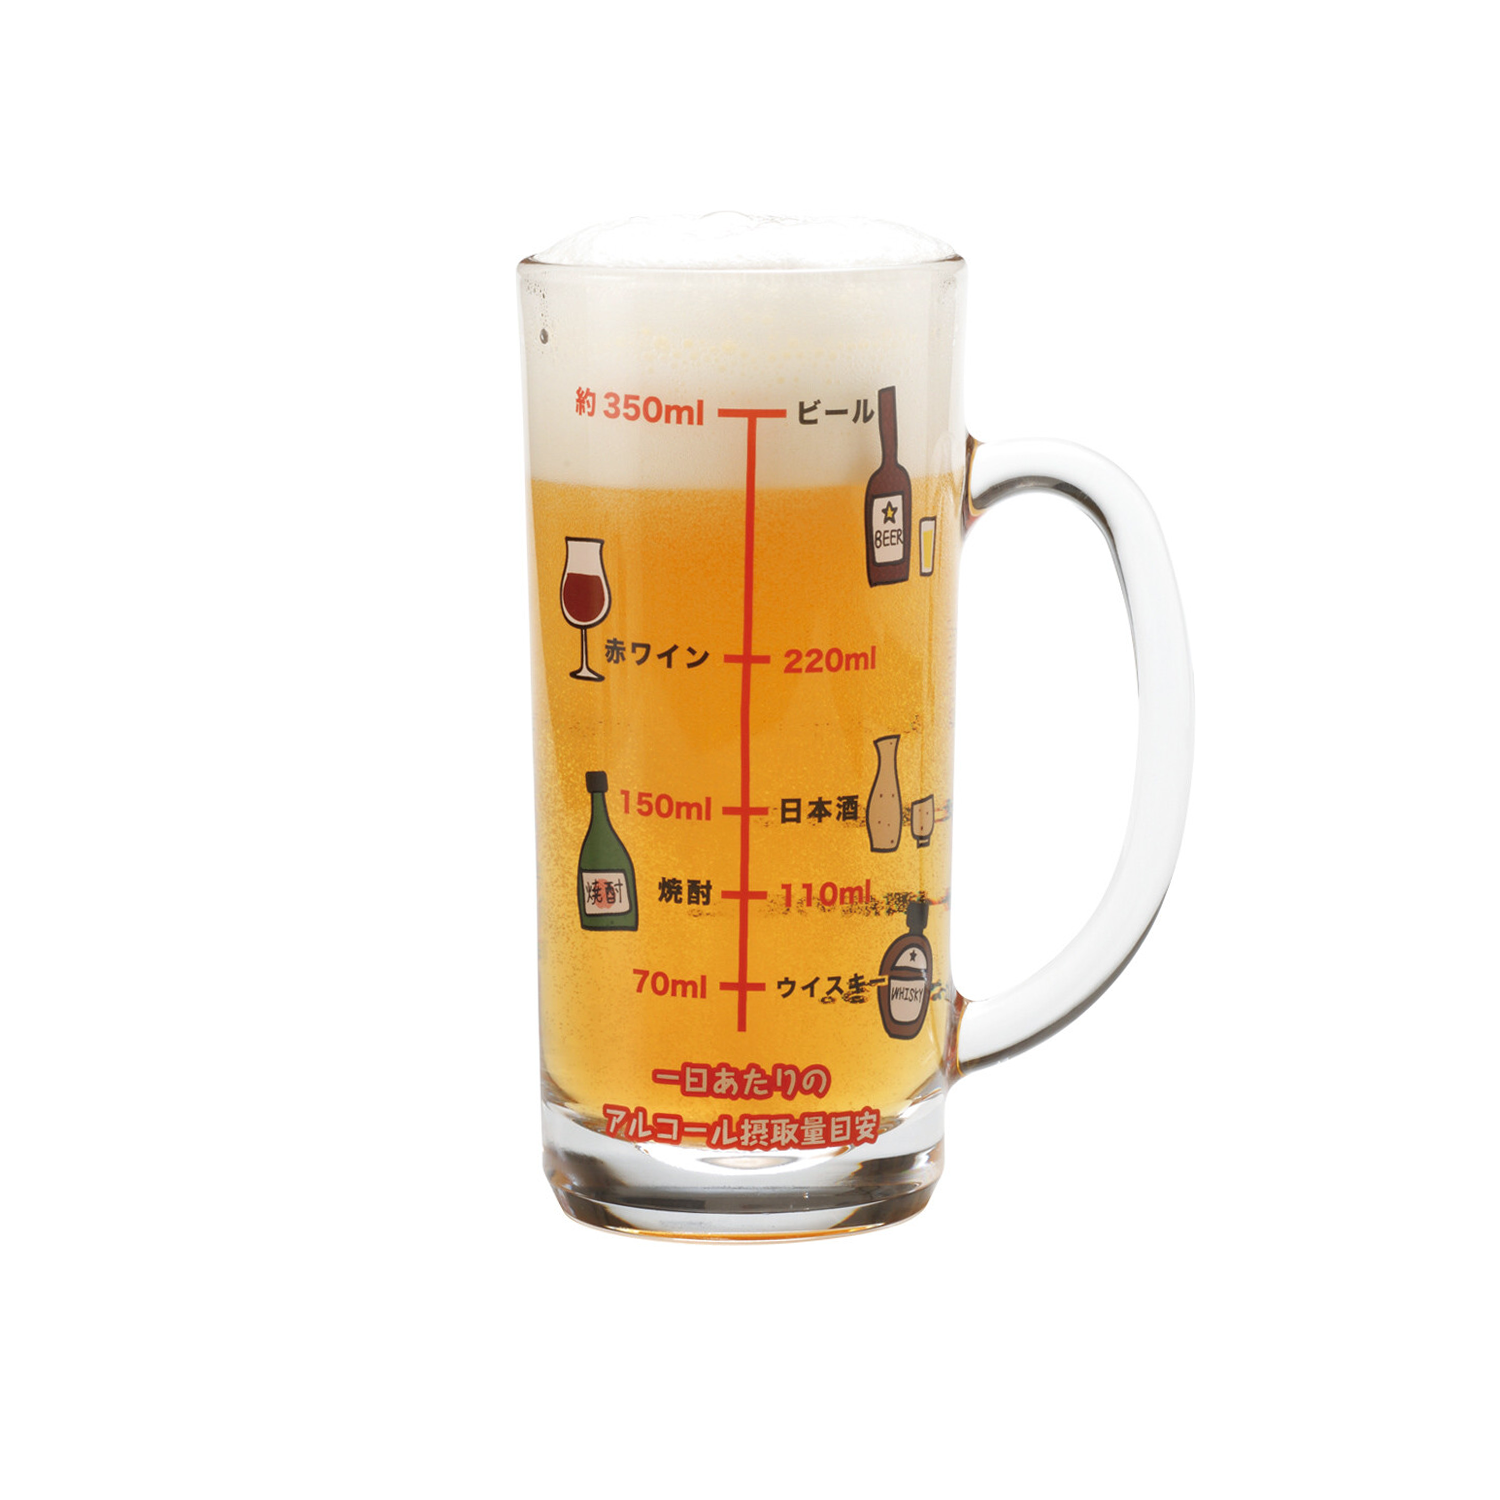 SUN ART Alcohol Intake Scale 435ml Beer Mugs